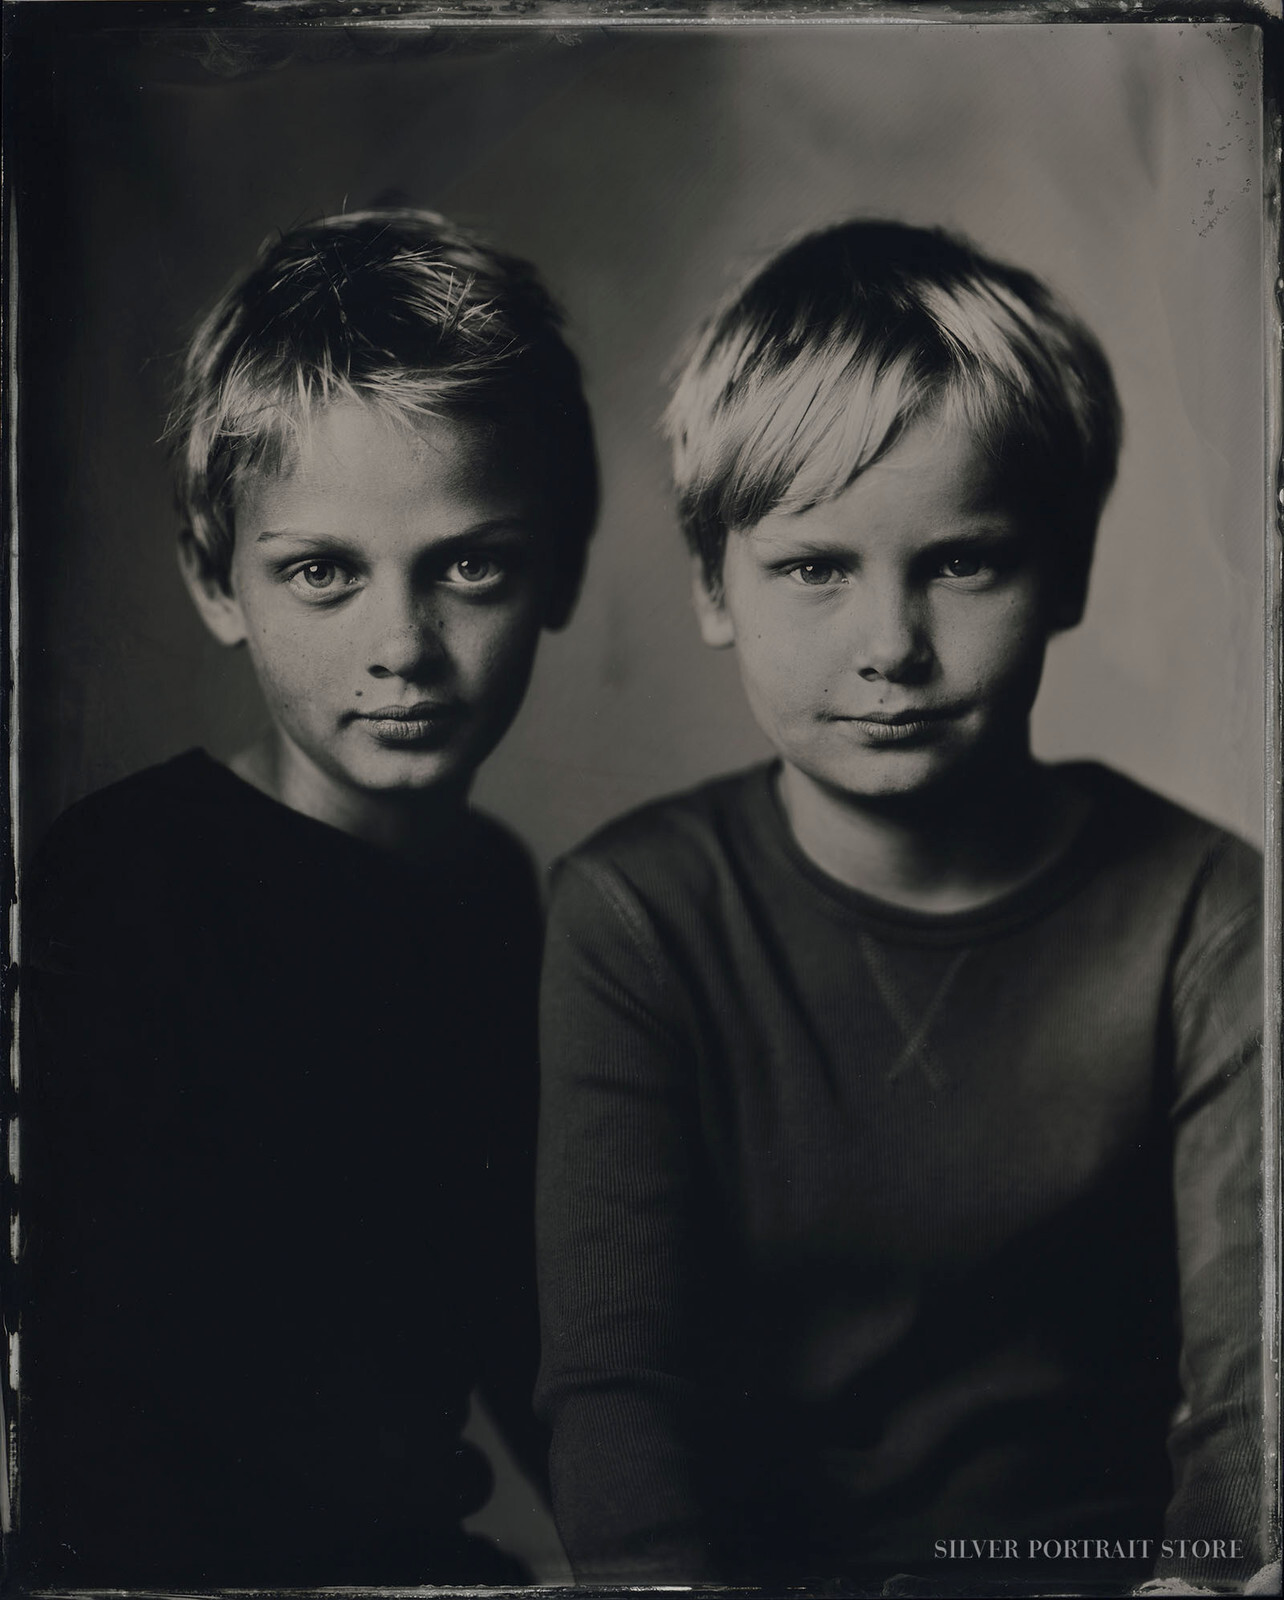 Savino en Oscar-Silver Portrait Store-Wet plate collodion-Tintype 20 x 25 cm.